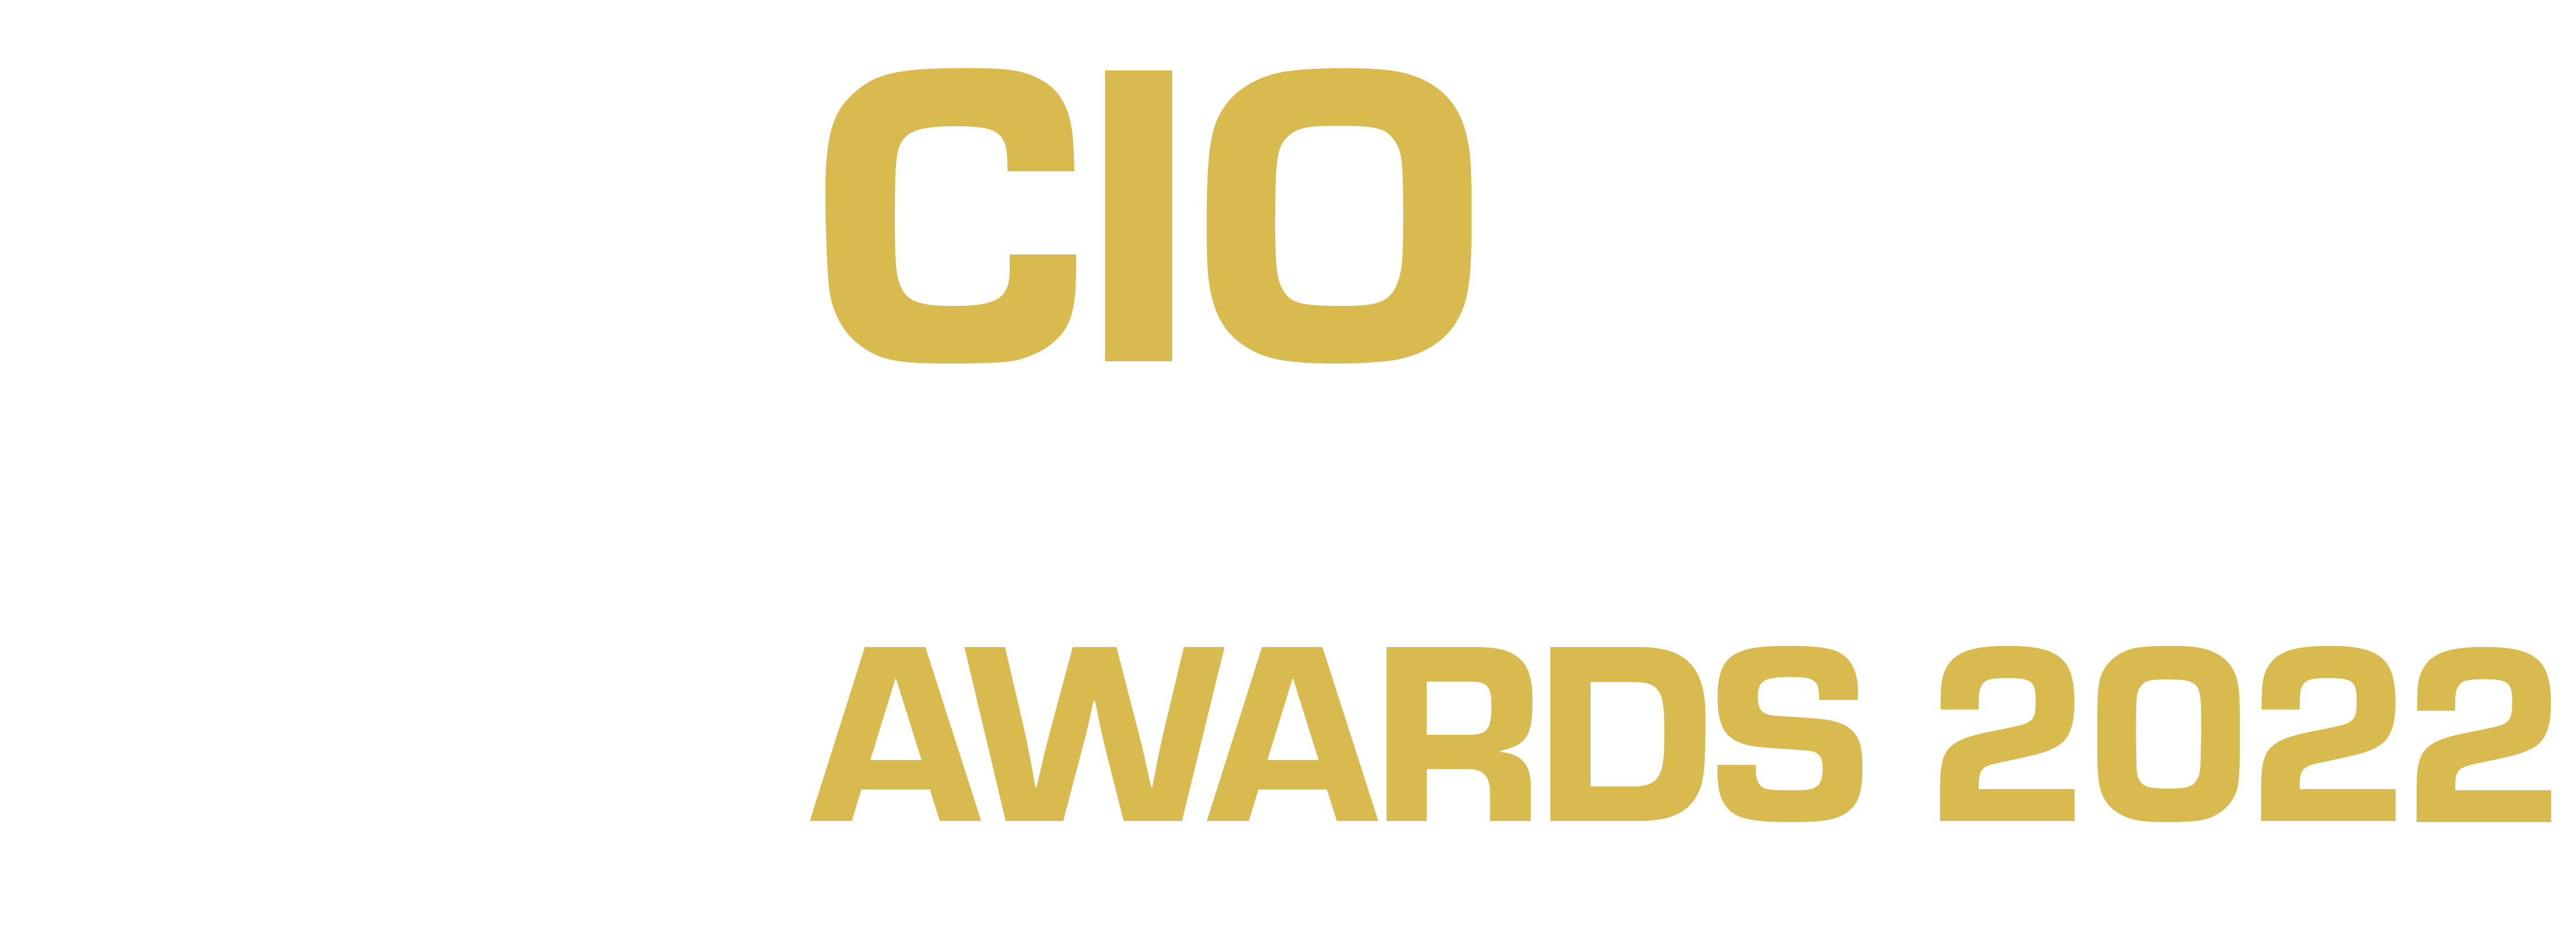 CIO Awards 2022